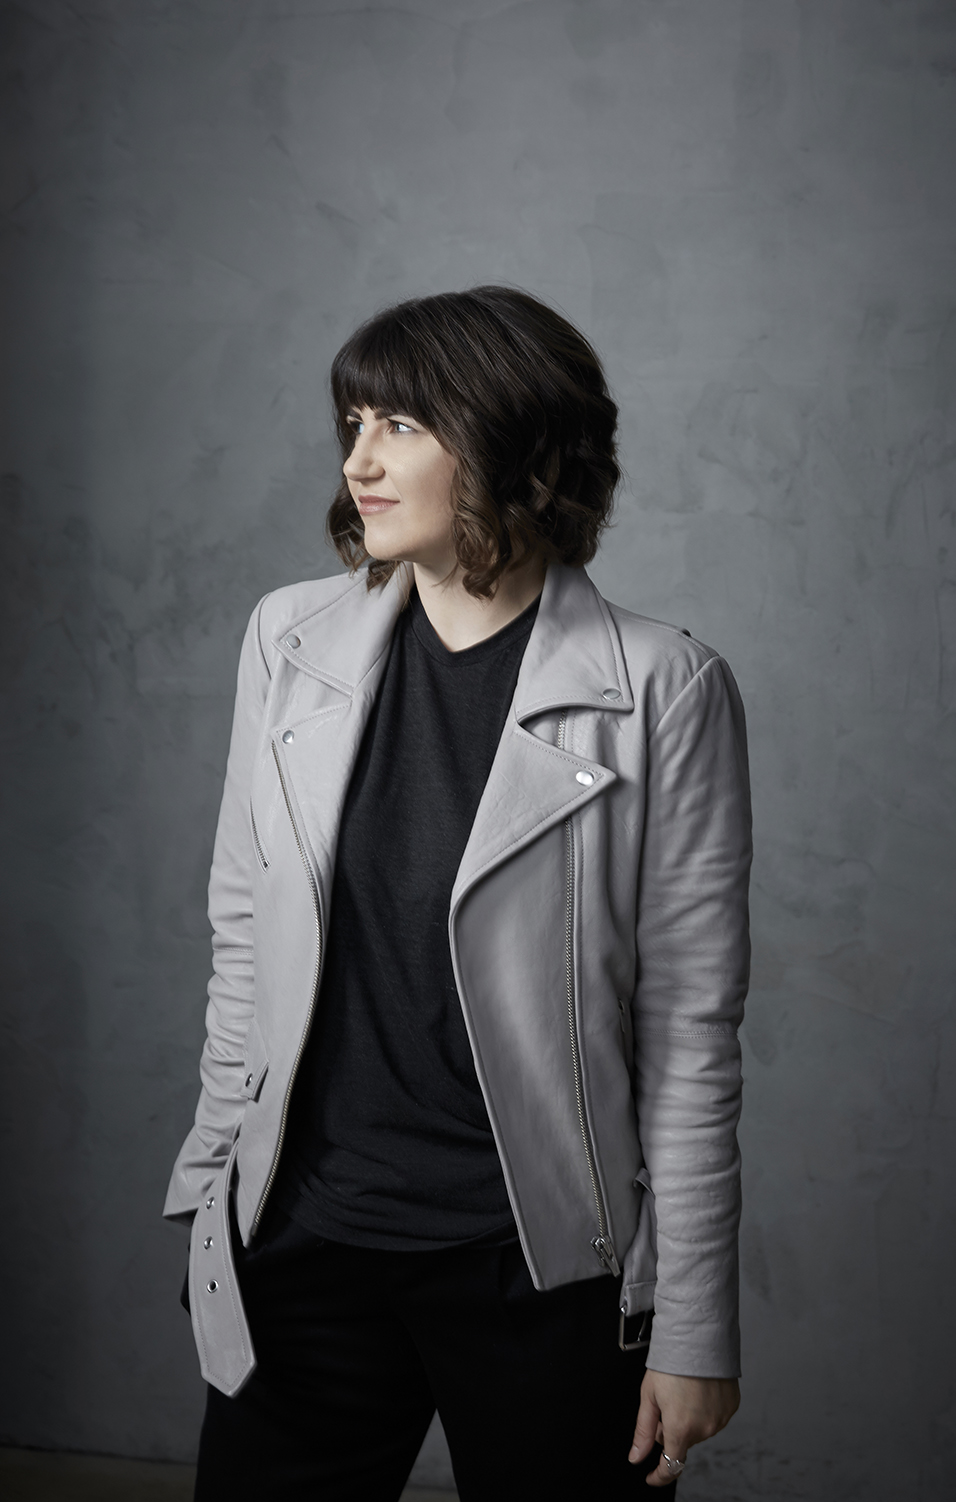 Profile photo of Sara Medd wearing a grey jacket.